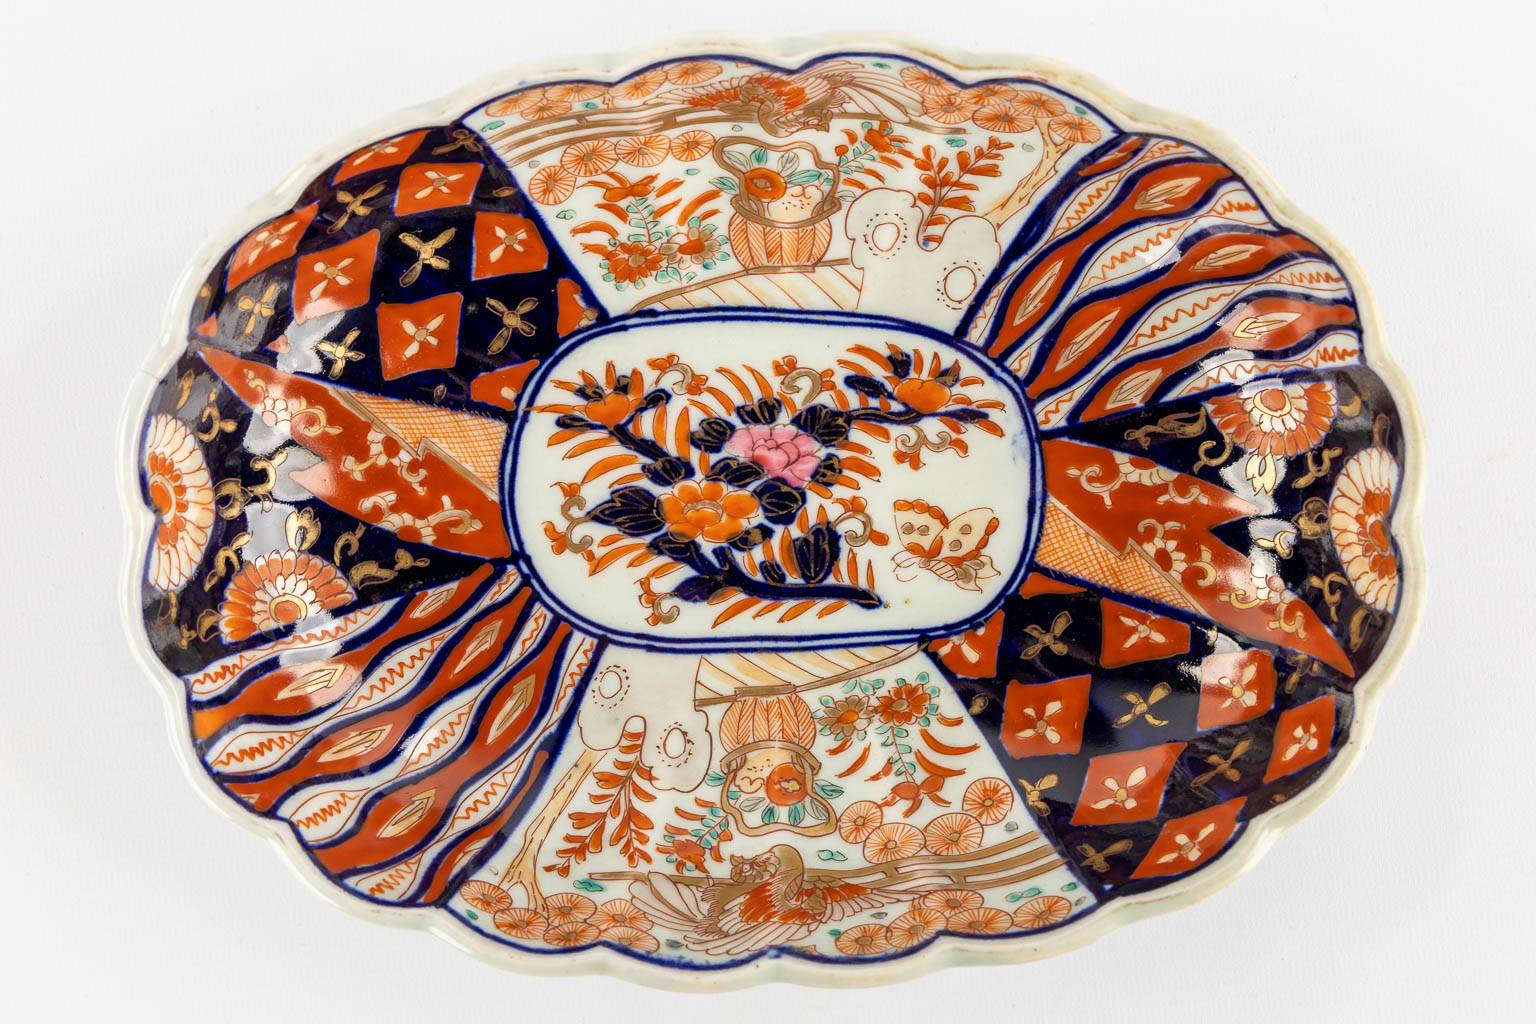 A pair of vases and a bowl, Japanese Imari porcelain. (H:25 x D:14 cm)